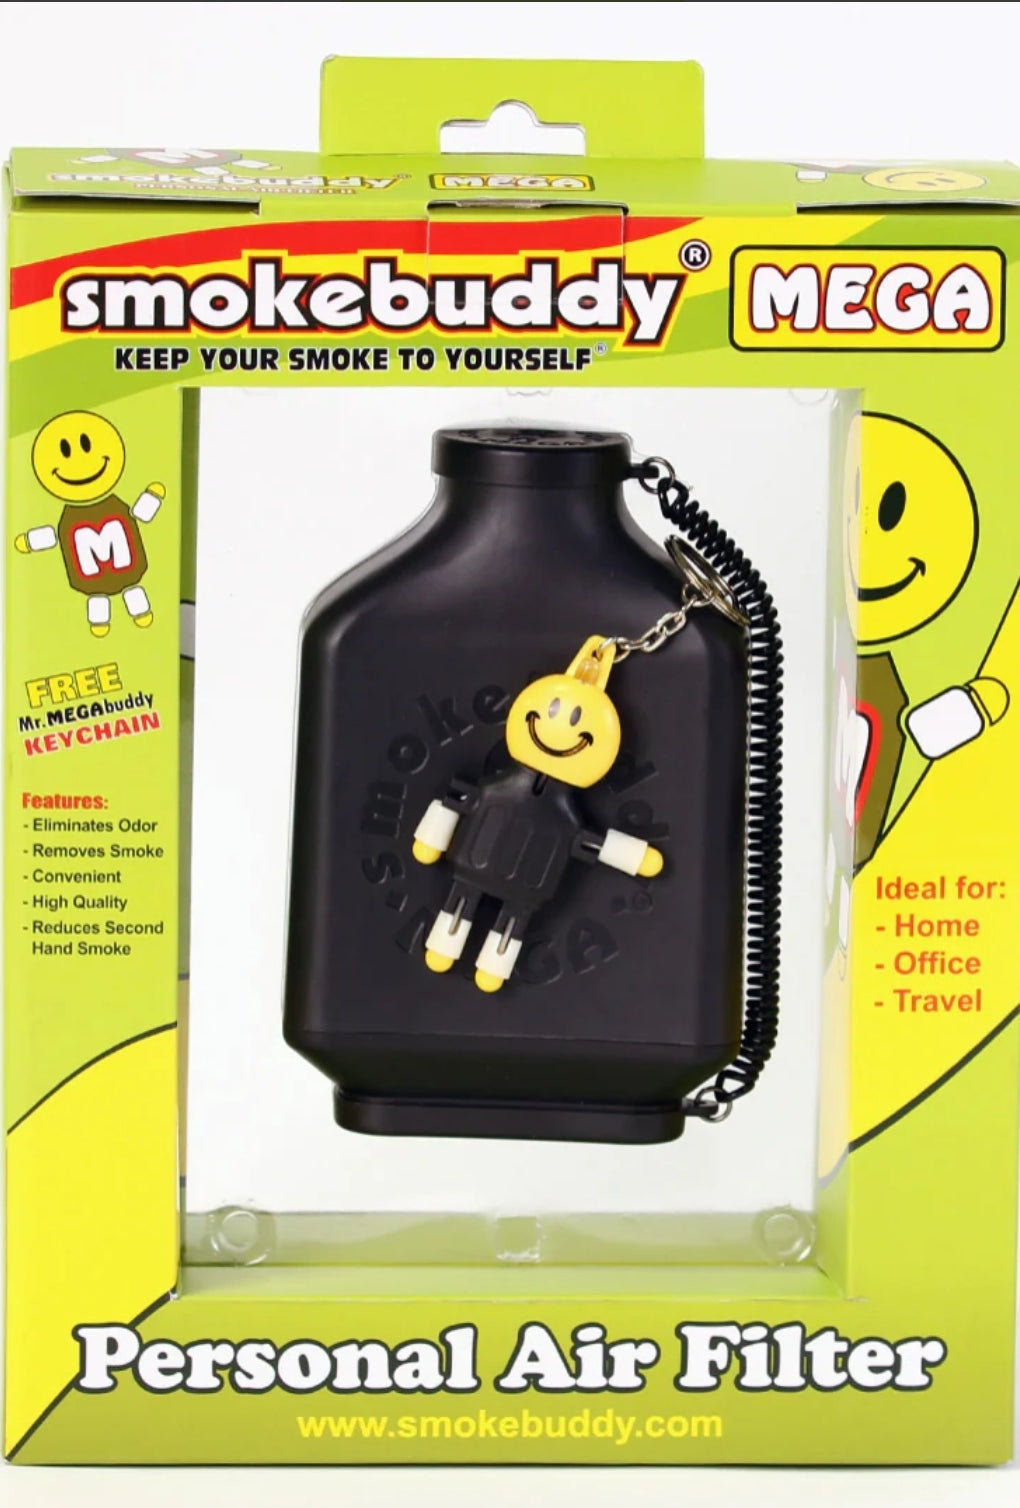 Smokebuddy MEGA